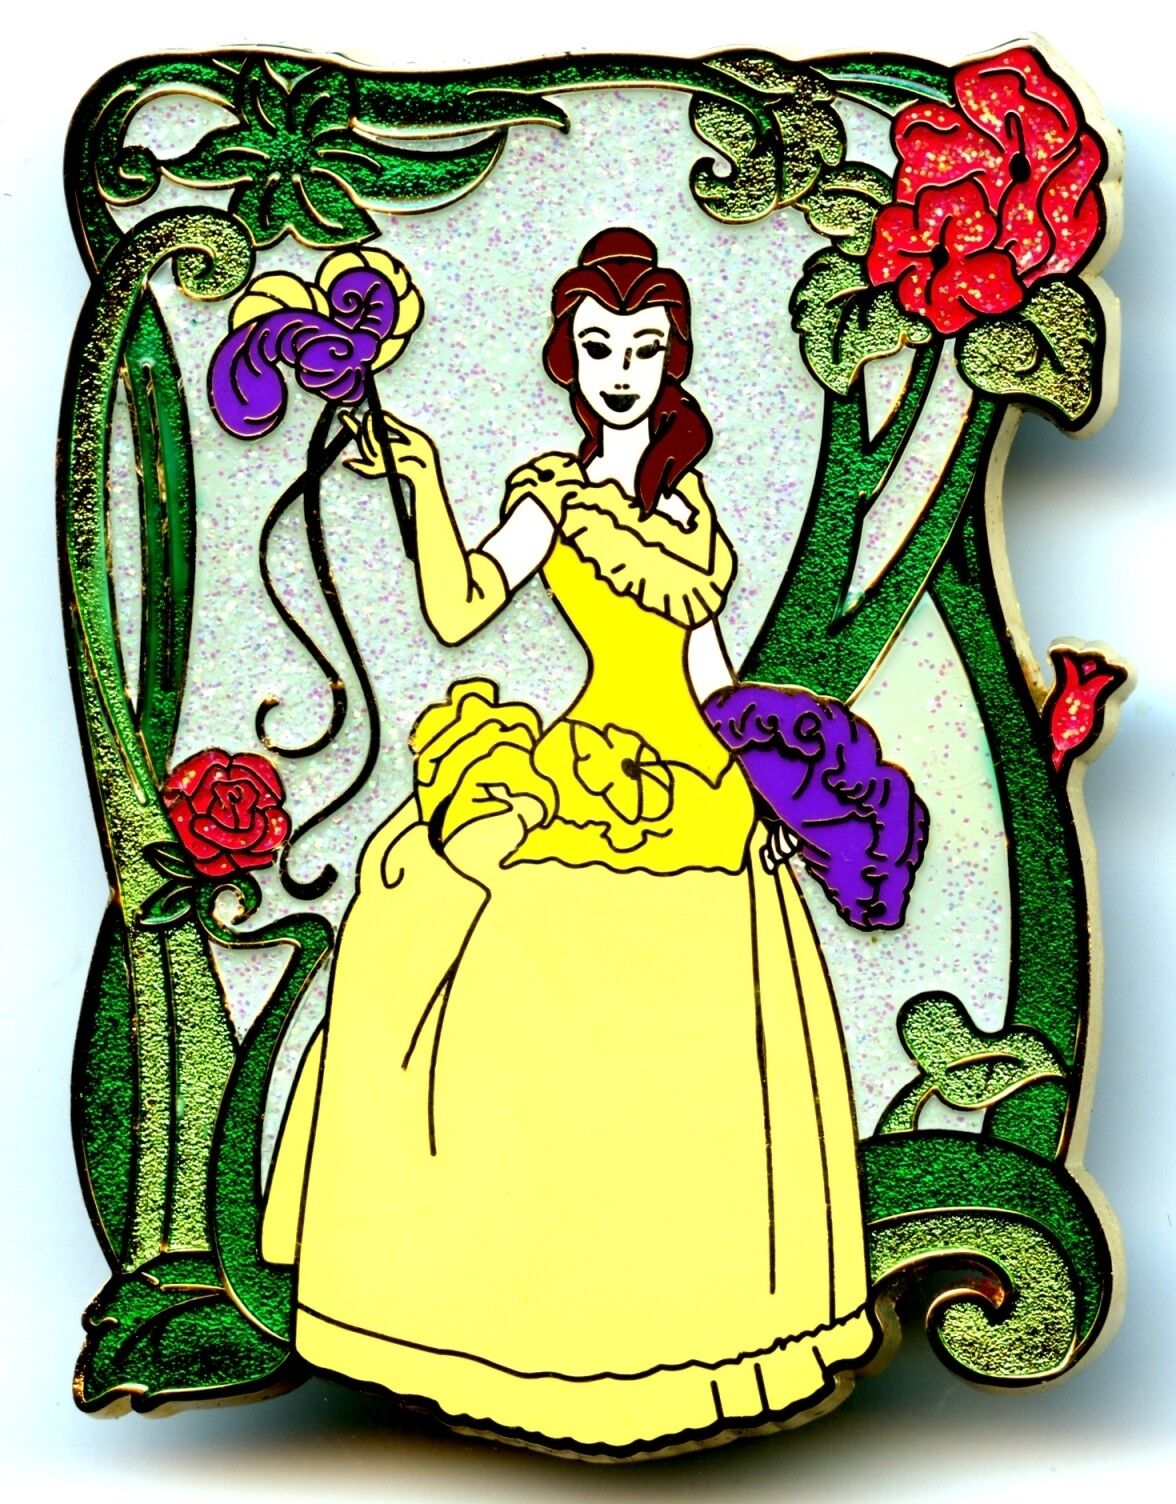 DisneyShopping.com - Regal Disney Princess - Belle (Beauty & The Beast) Pin